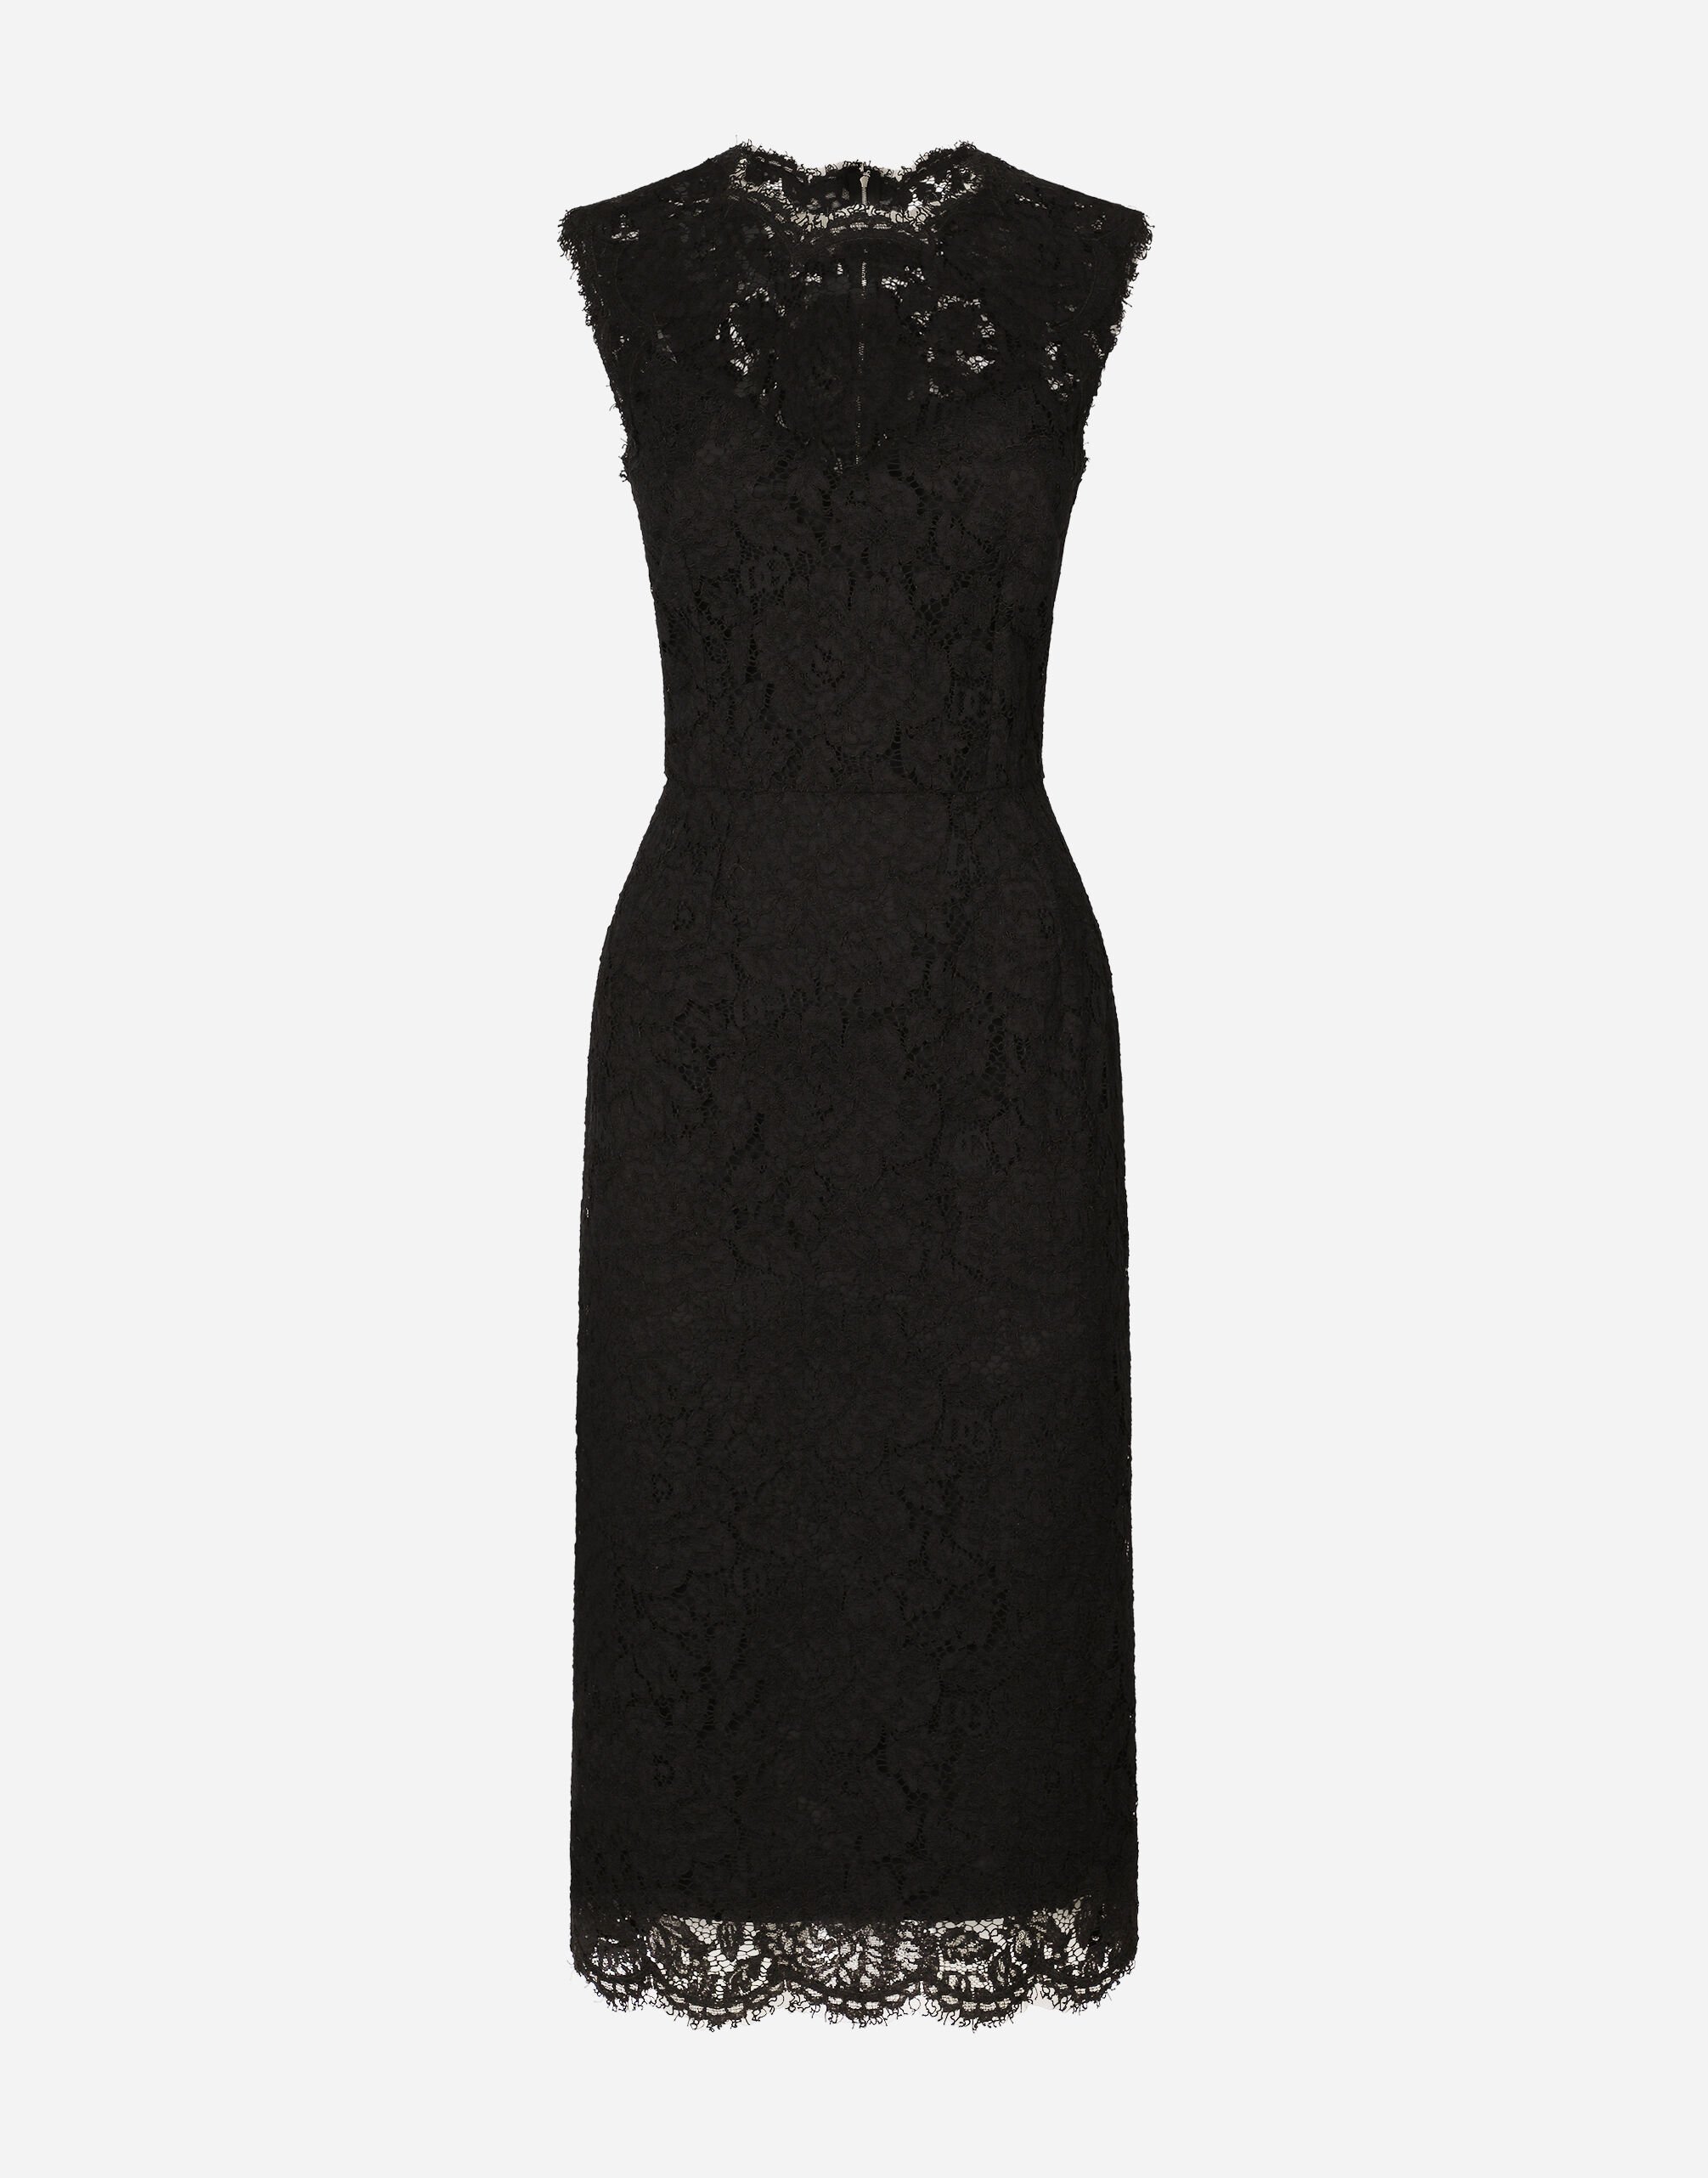 Dolce & Gabbana فستان بطول للربلة من دانتيل مرن مصقول أسود BB6002AI413